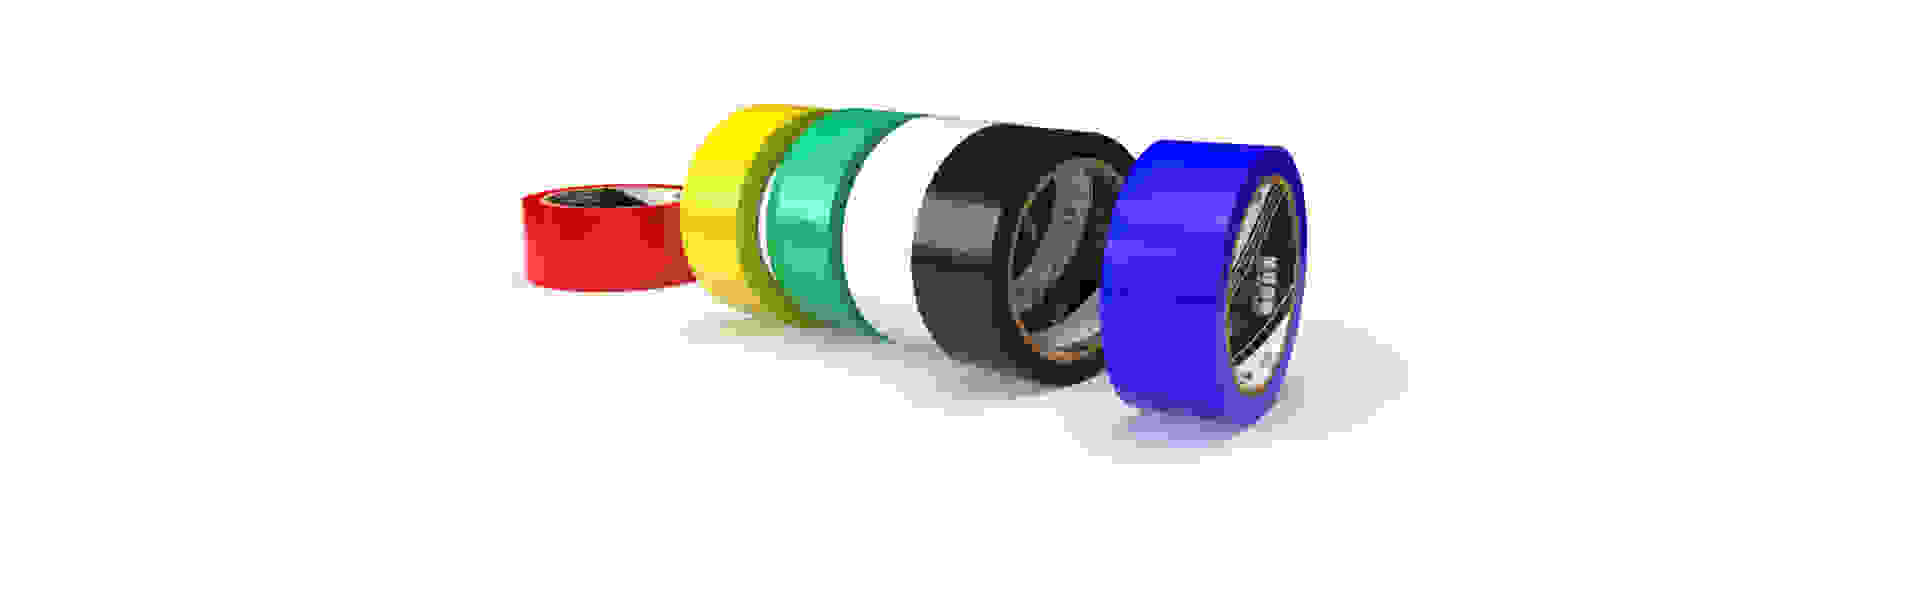 Globe テープ OPP カラー包装テープ